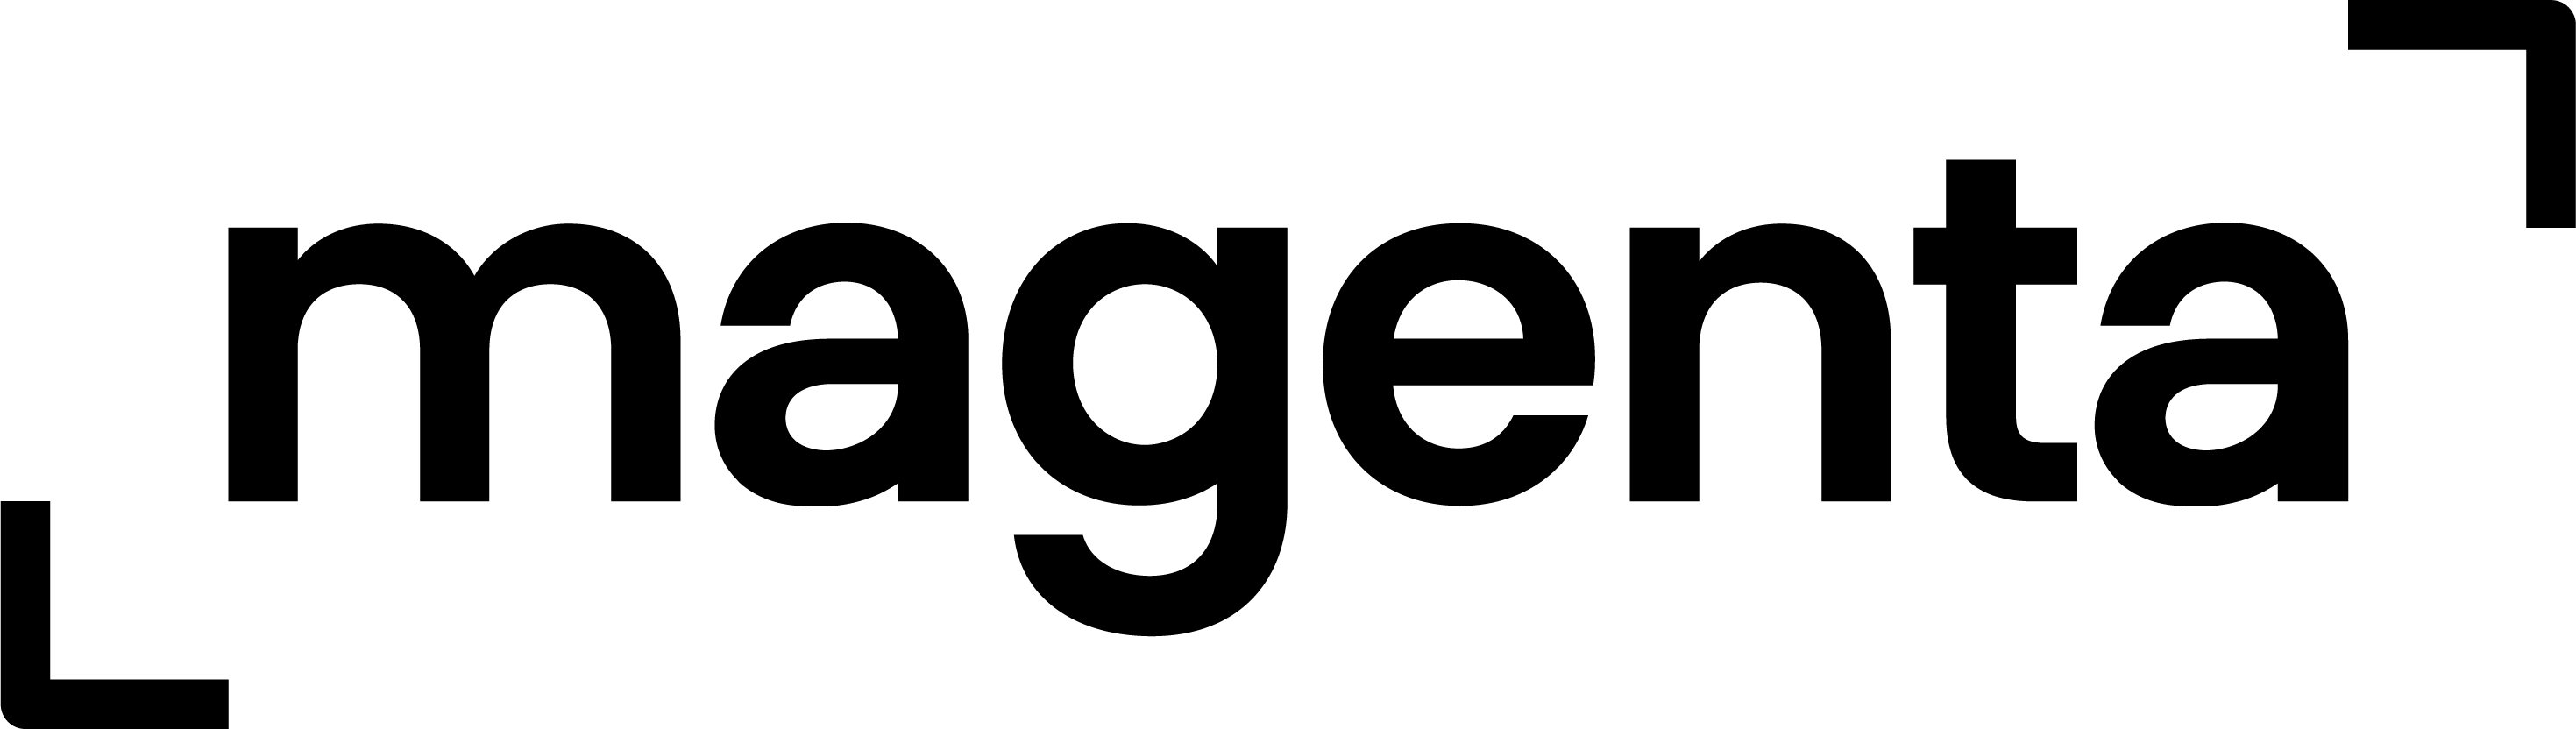 Magenta Logo - Black